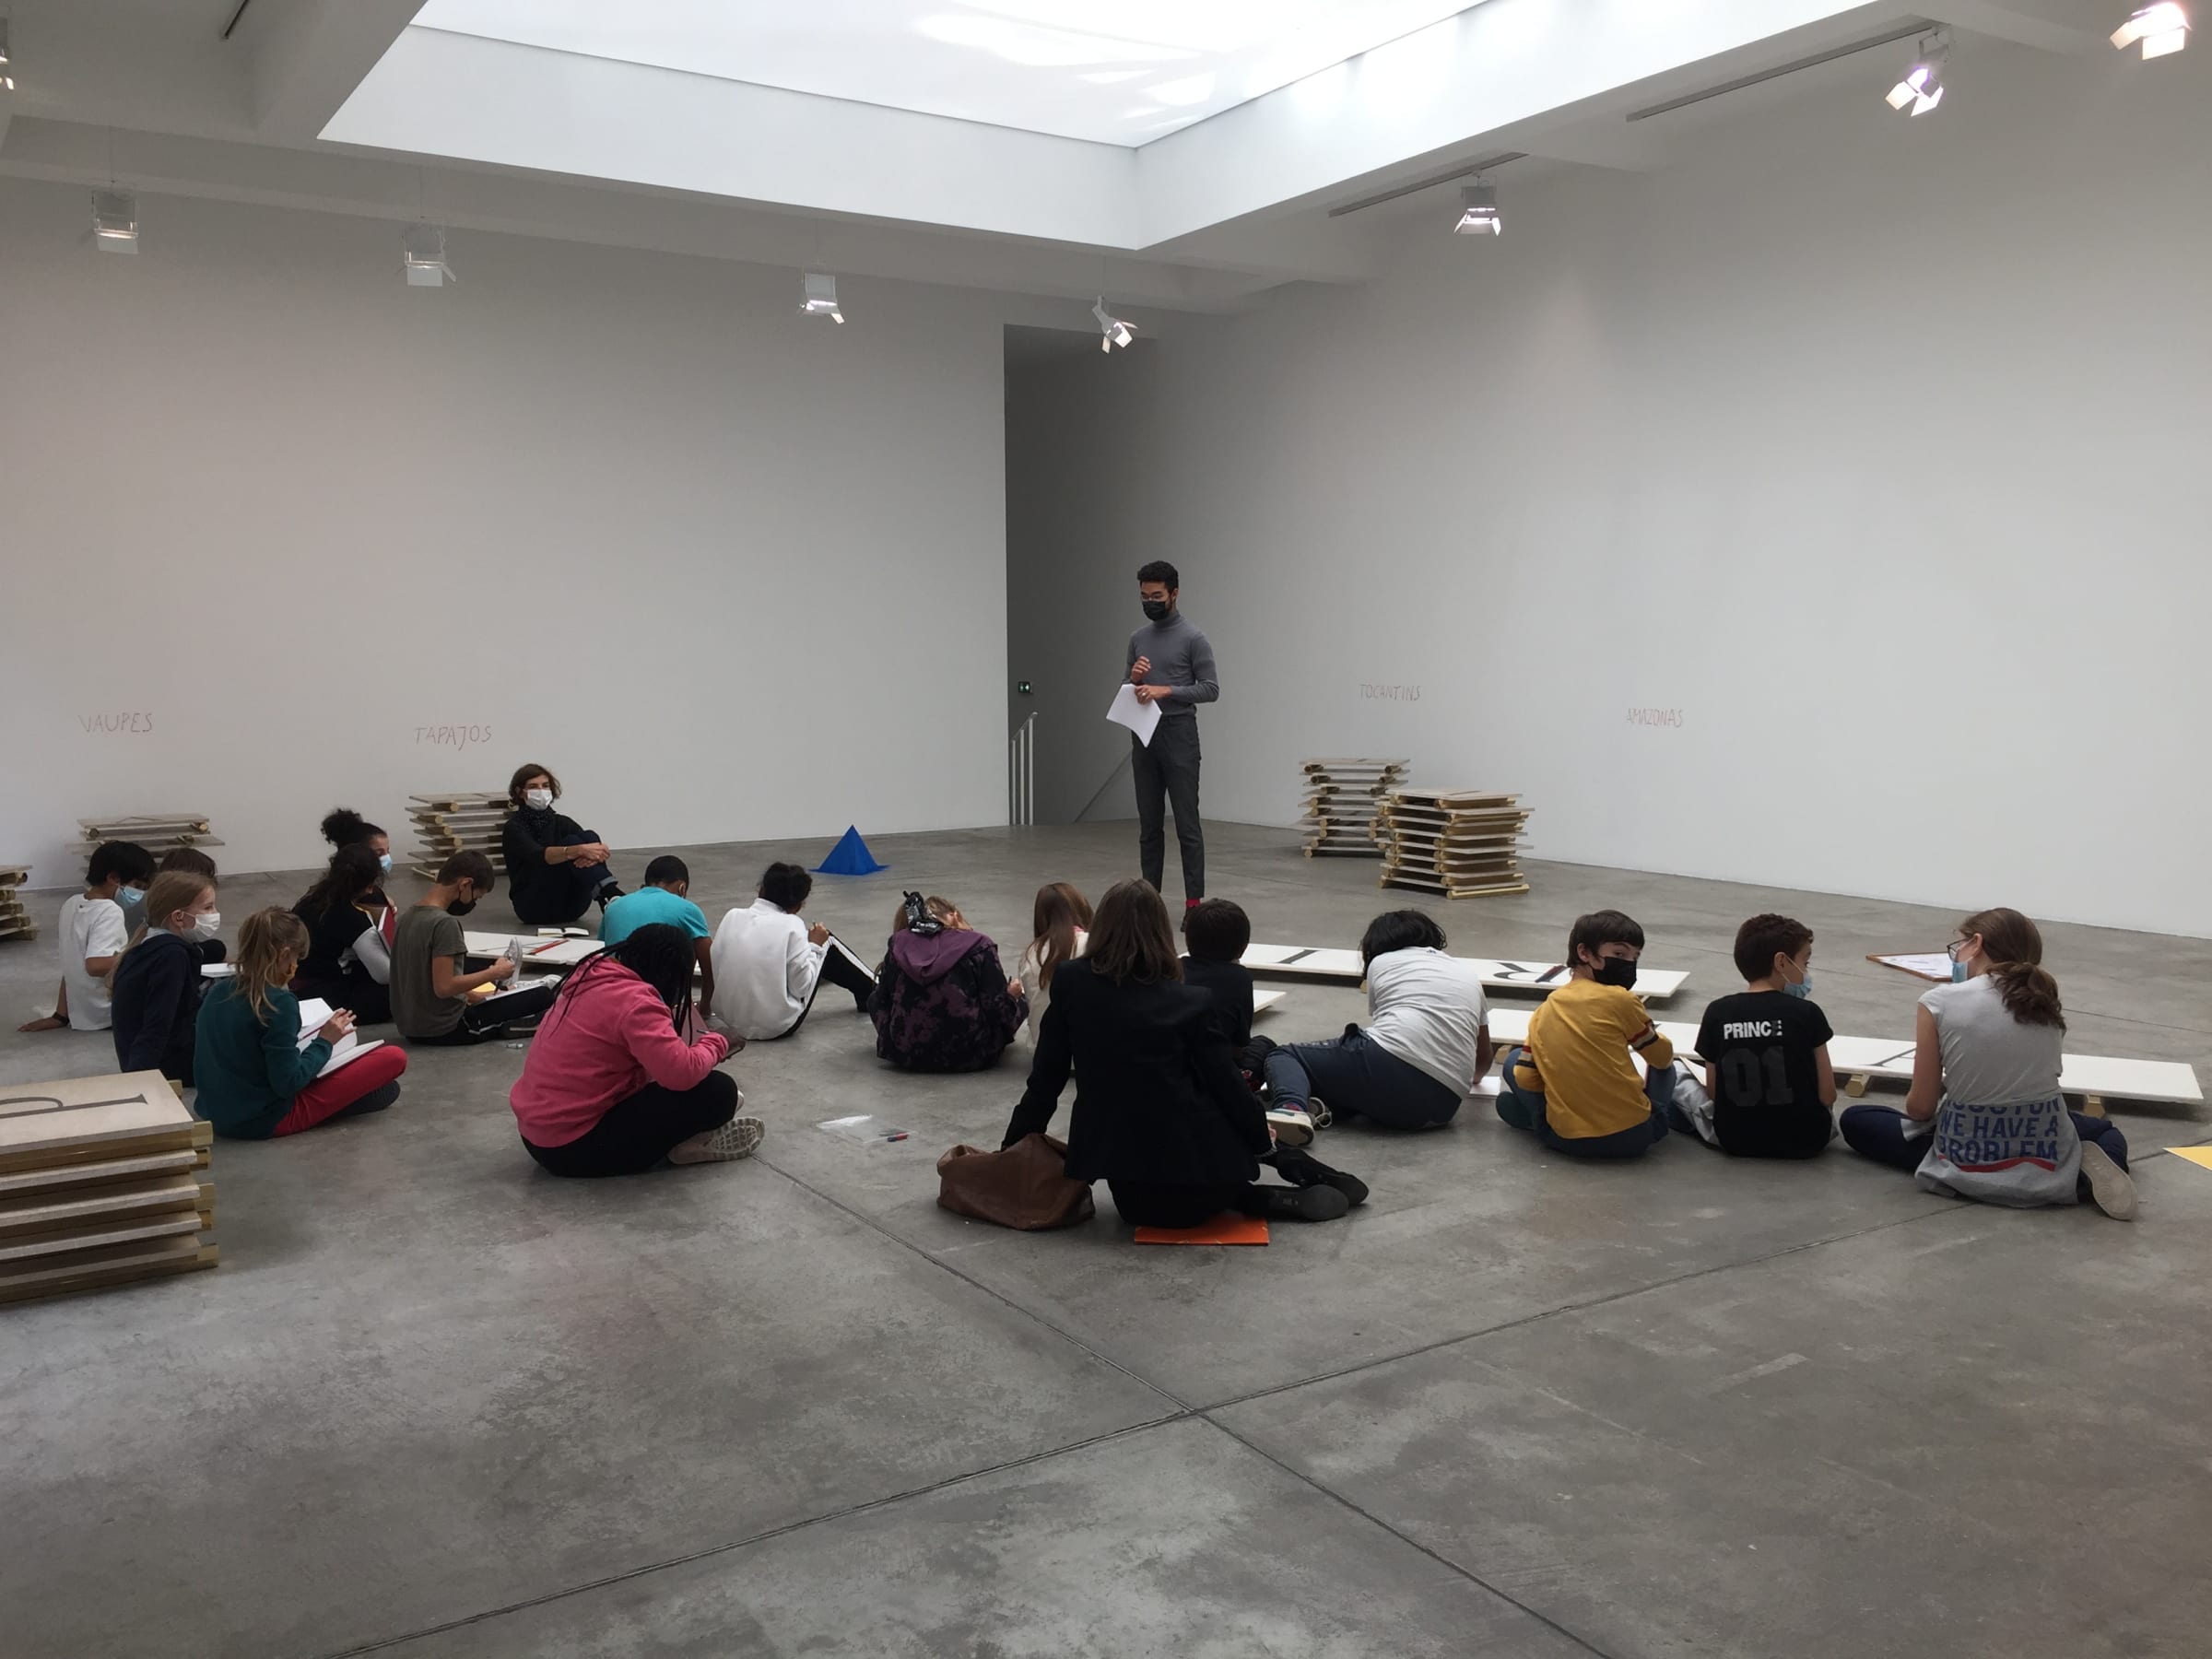 Kids on the floor of Marian Goodman Gallery in Paris  listening to a staff member talk about lothar baumgarten